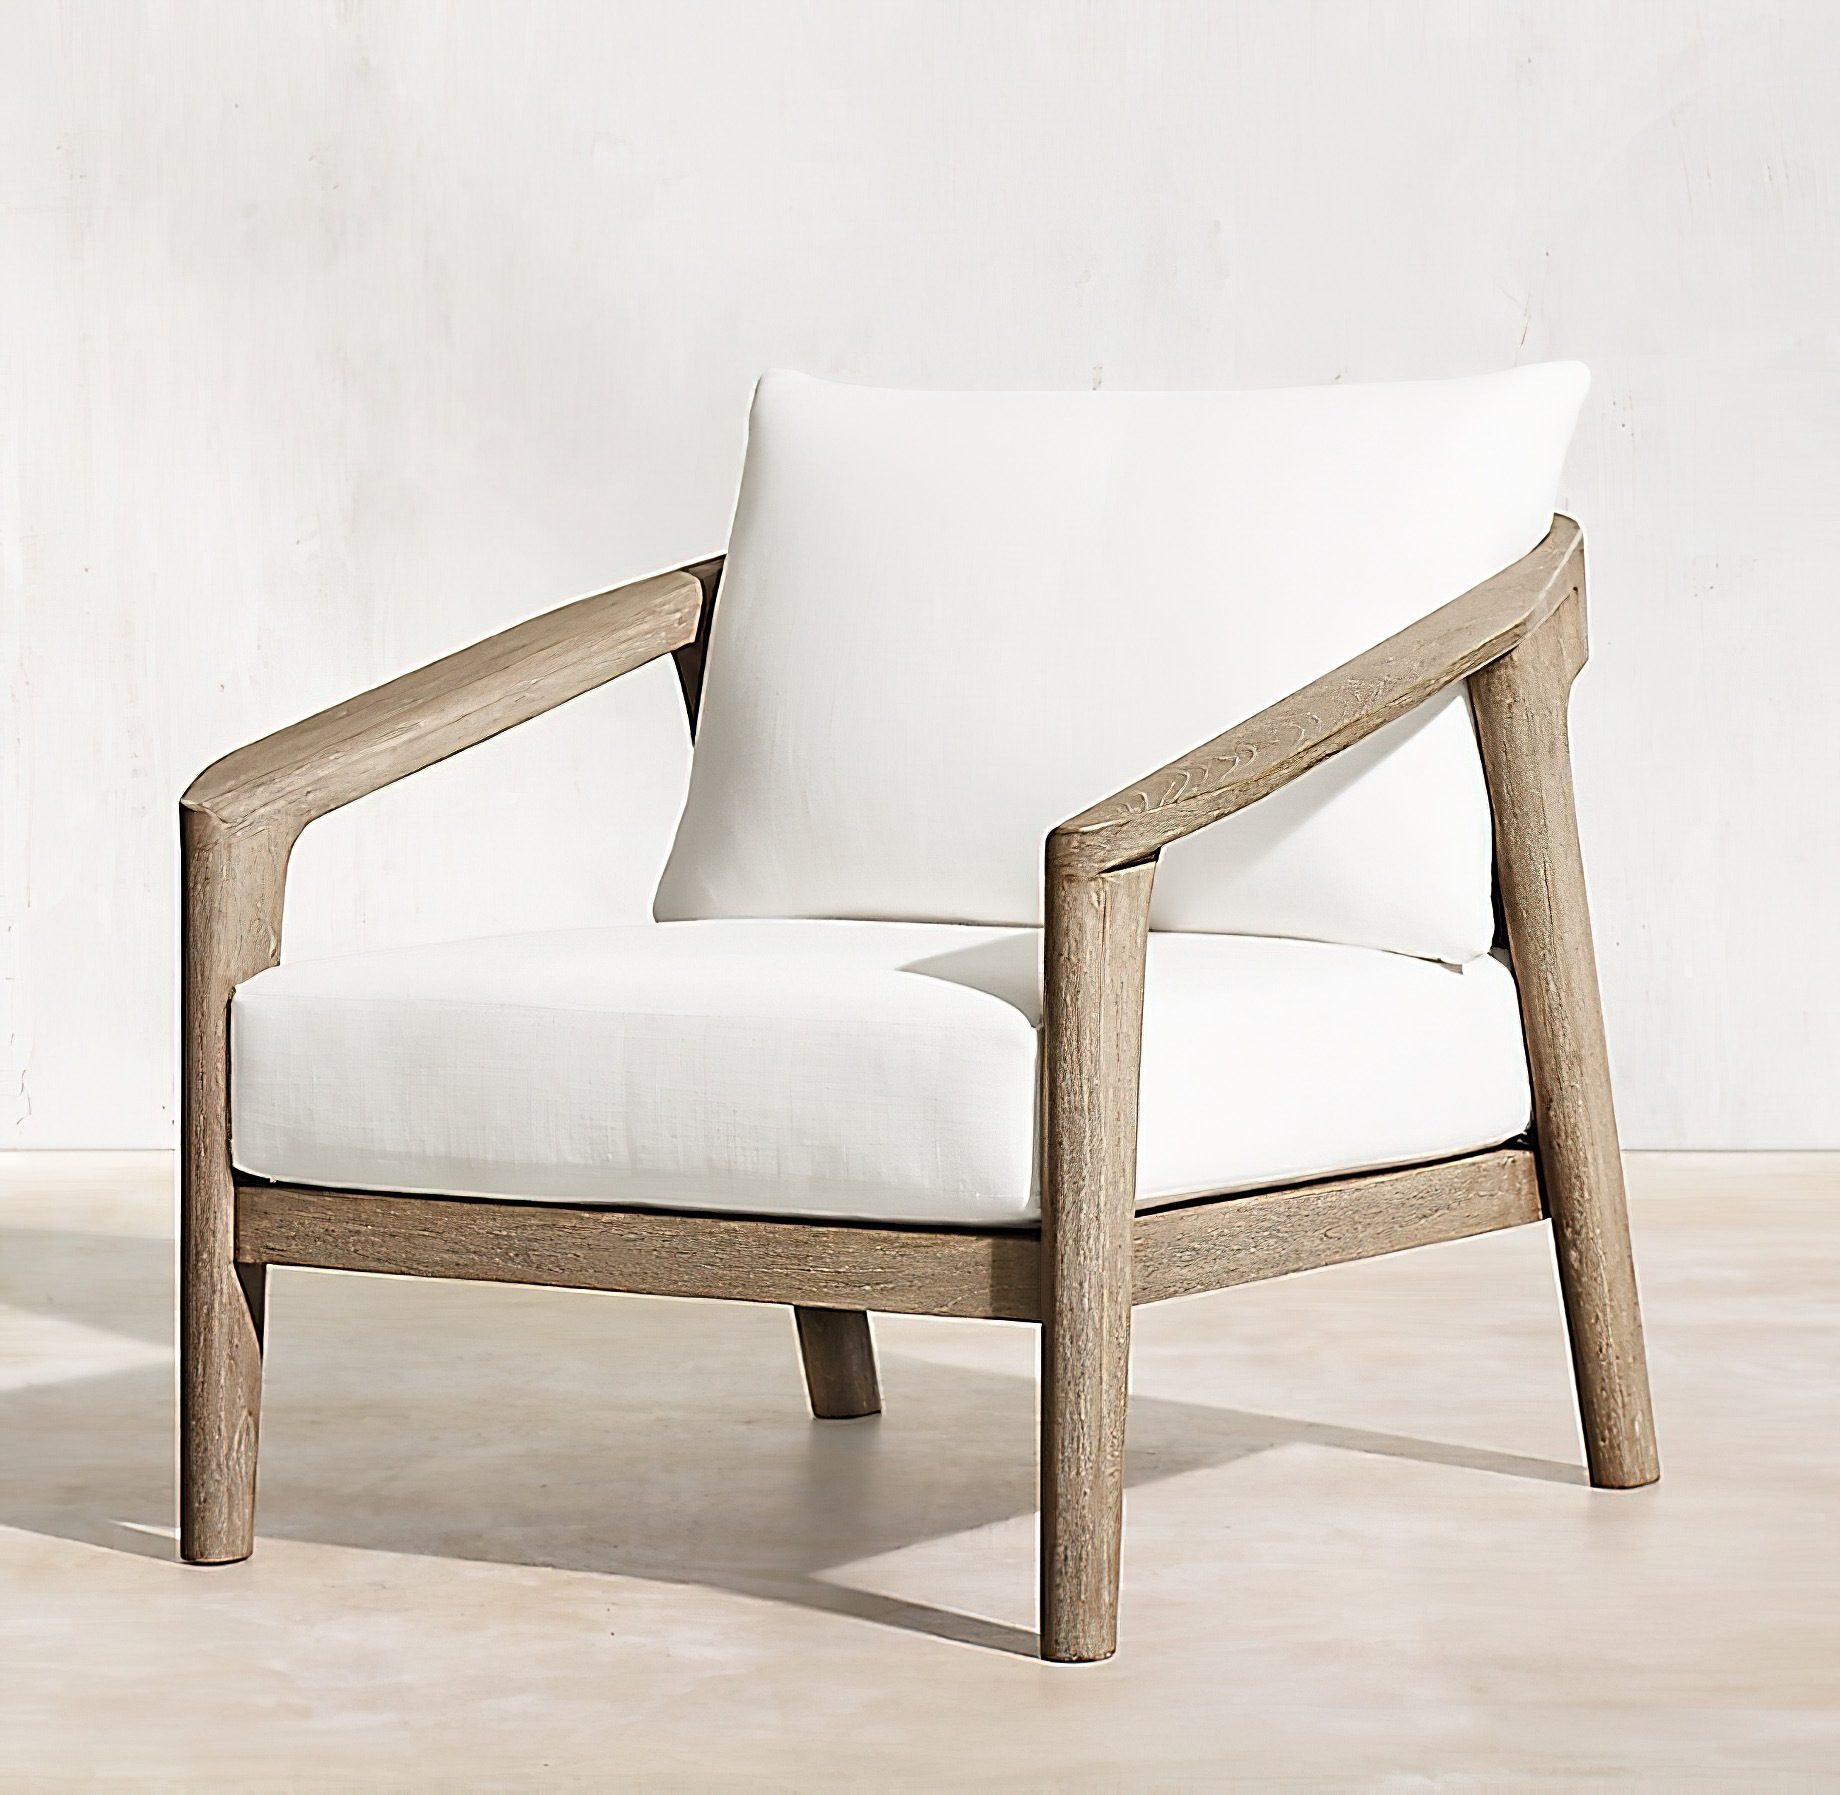 Malta Teak Collection Outdoor Furniture Design for RH – Ramon Esteve – Malta Teak Lounge Chair